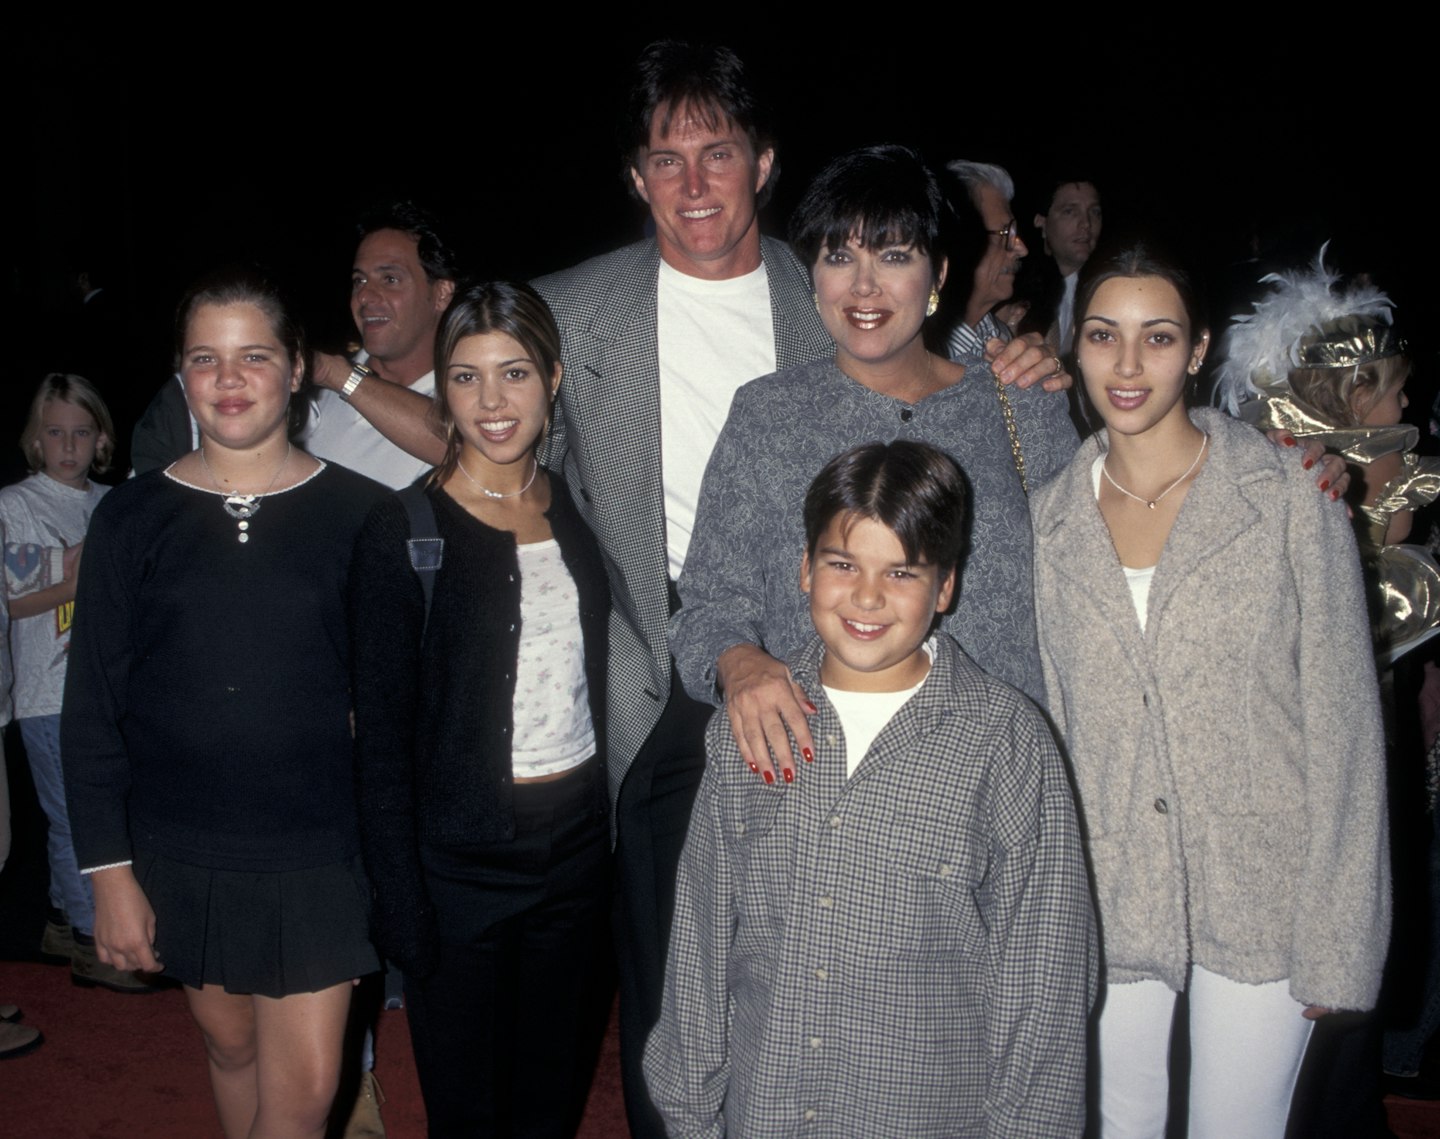 Khloe Kardashian 1995 (age 11)